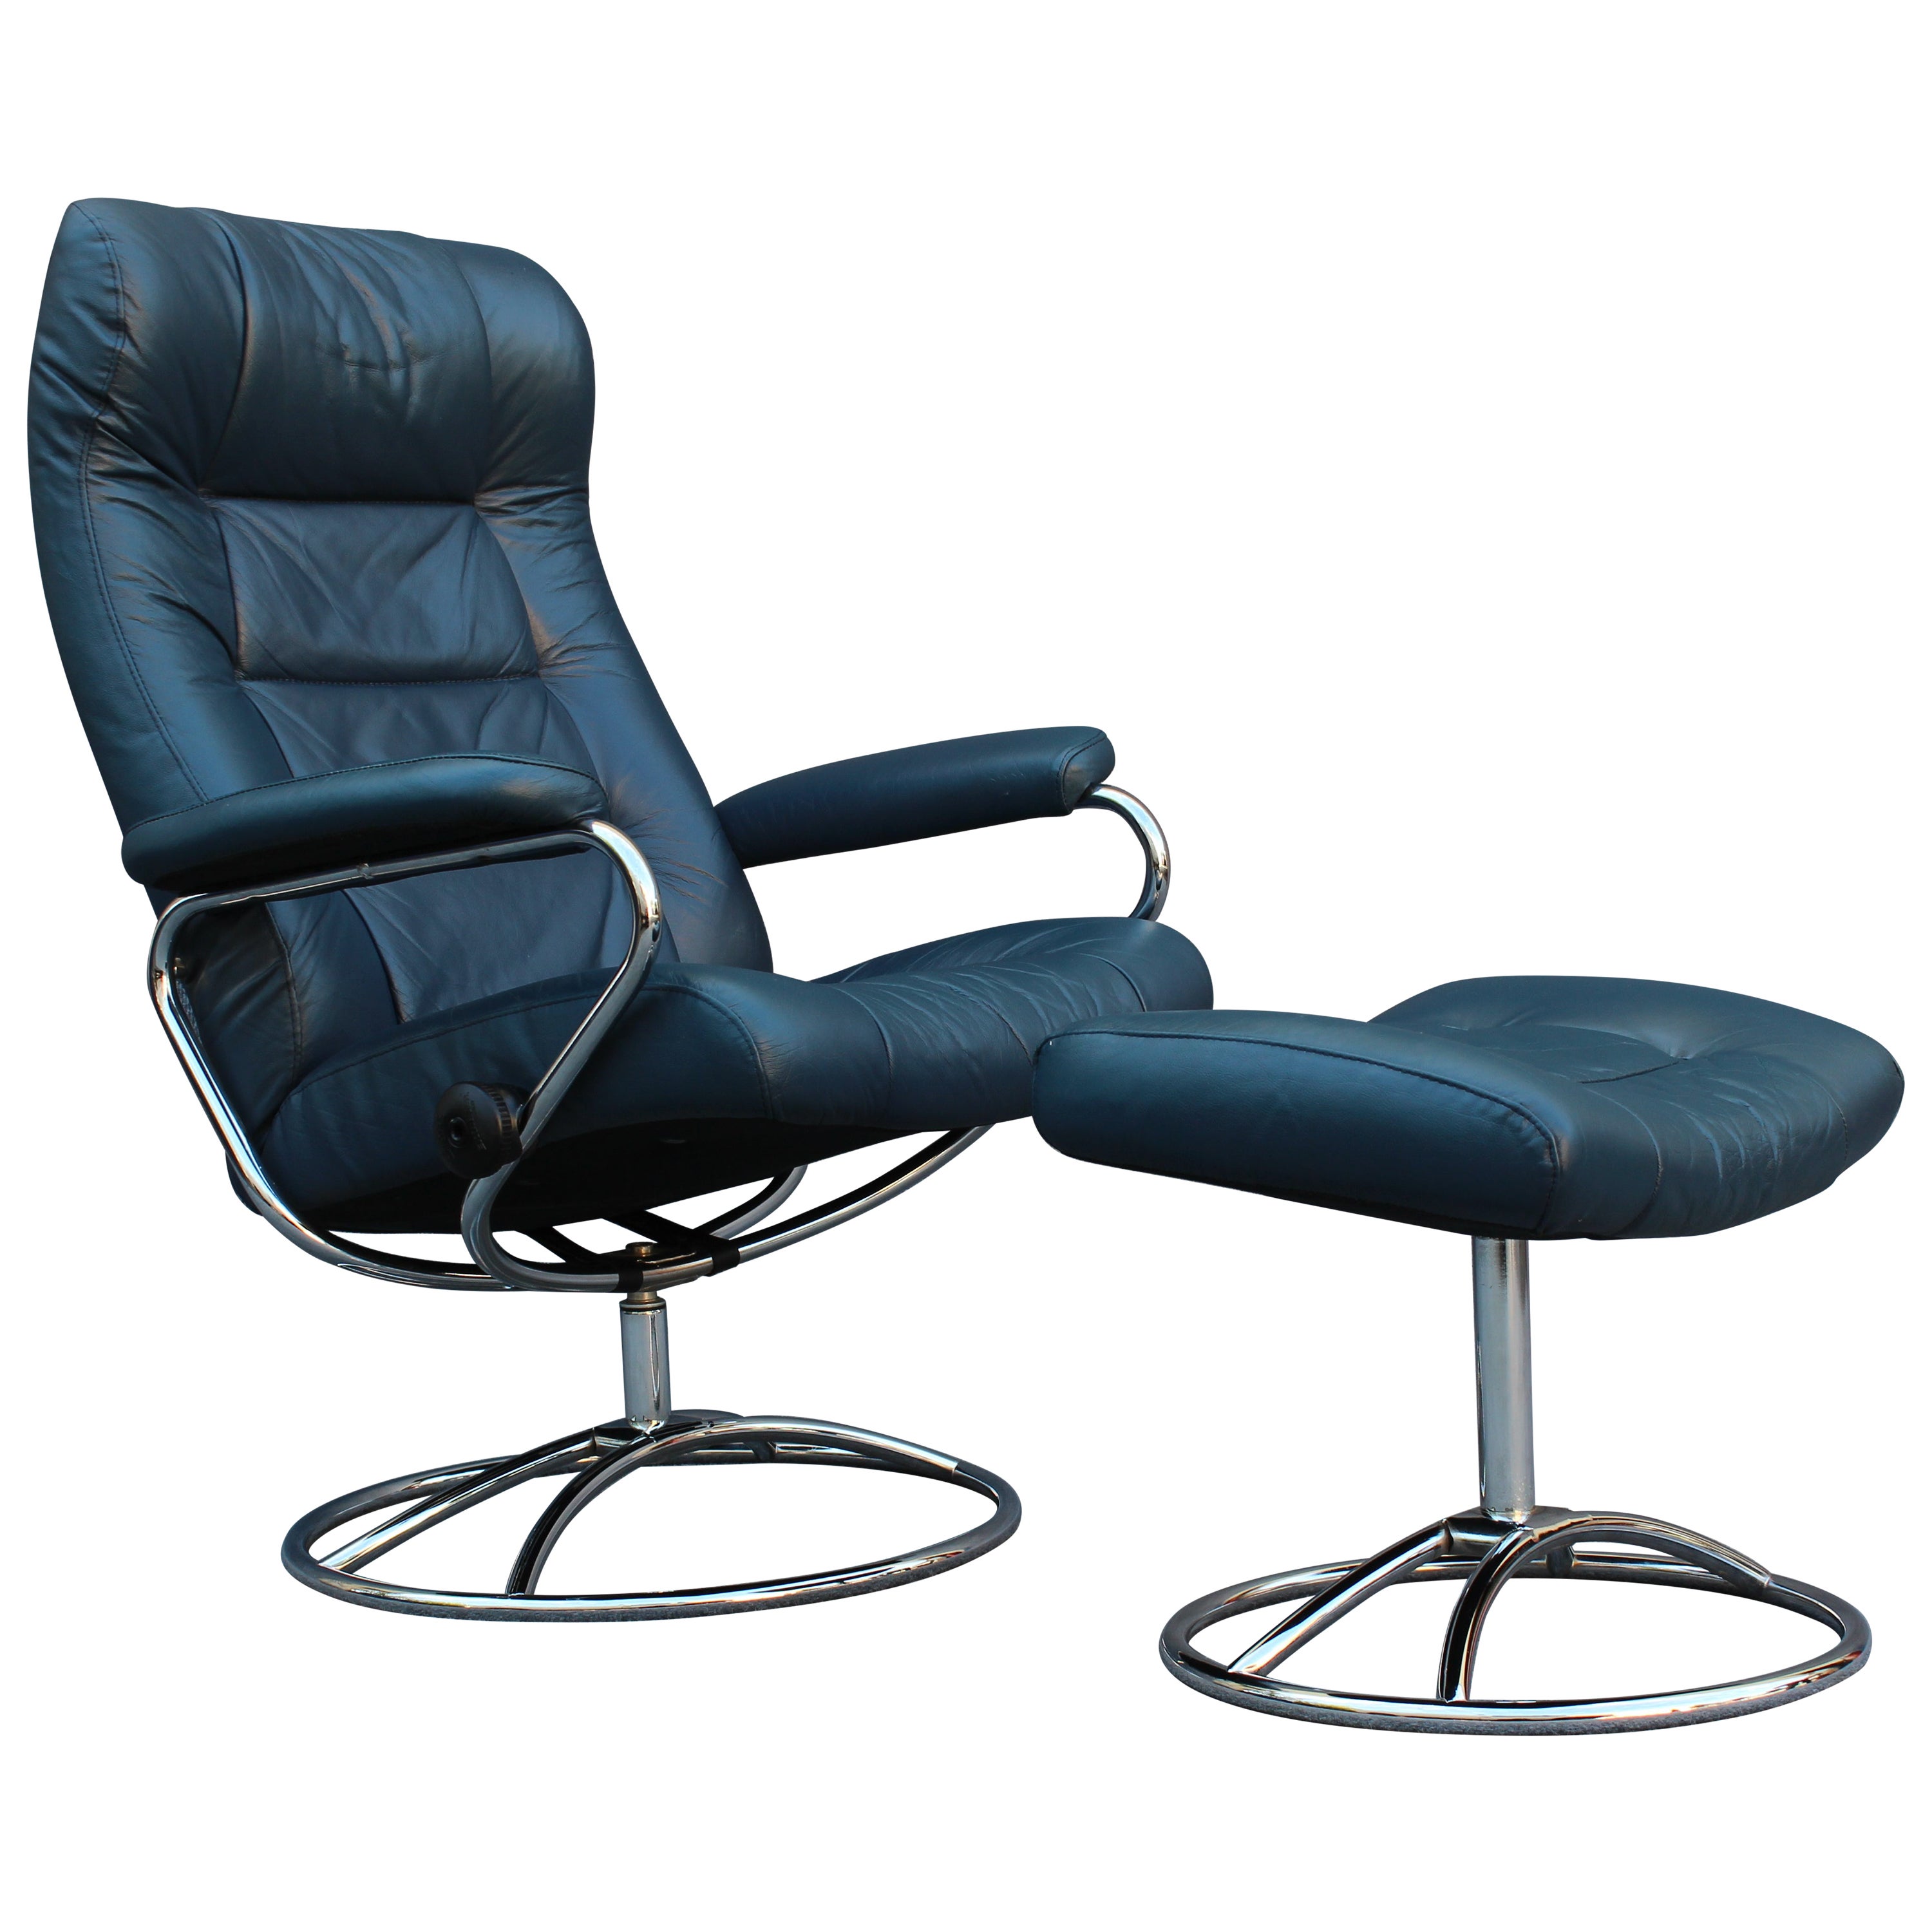 Ekornes Stressless Stressless Lounge Chair & Ottoman, Navy Blue Leather & Steel For Sale